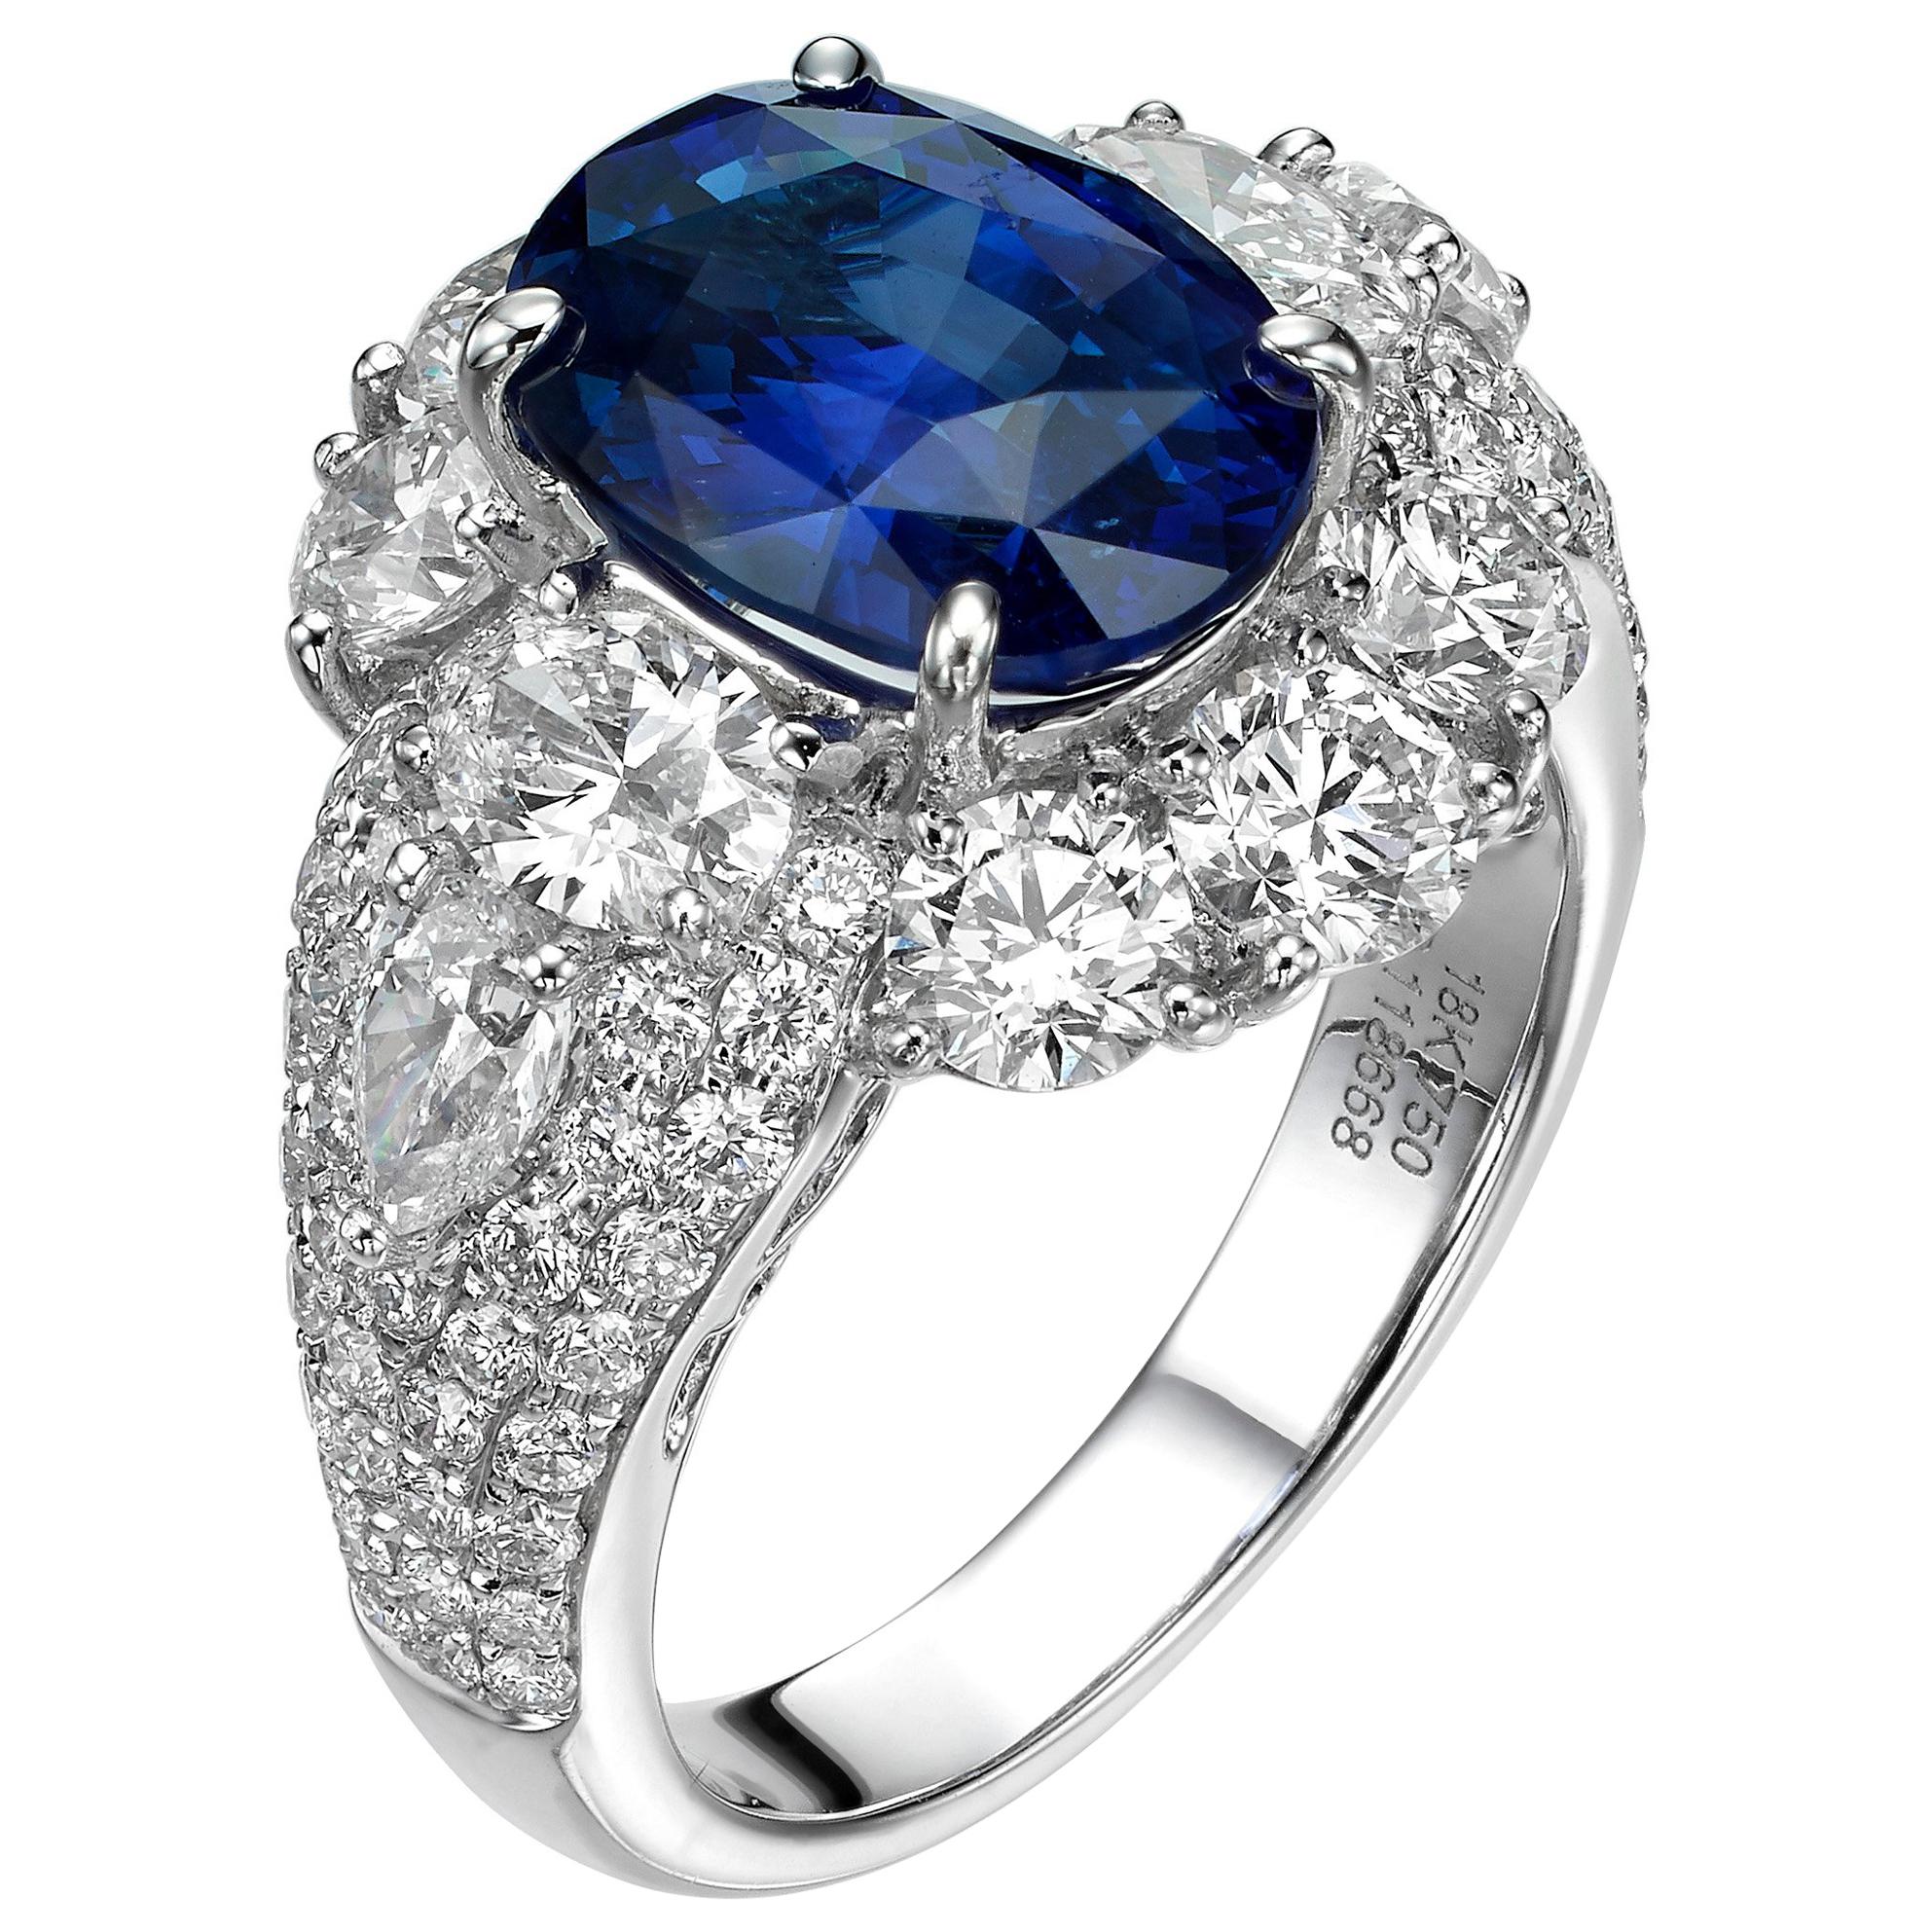 5.05 Carat Royal Blue Oval Ceylon Sapphire 18 Karat White Gold Diamond Ring